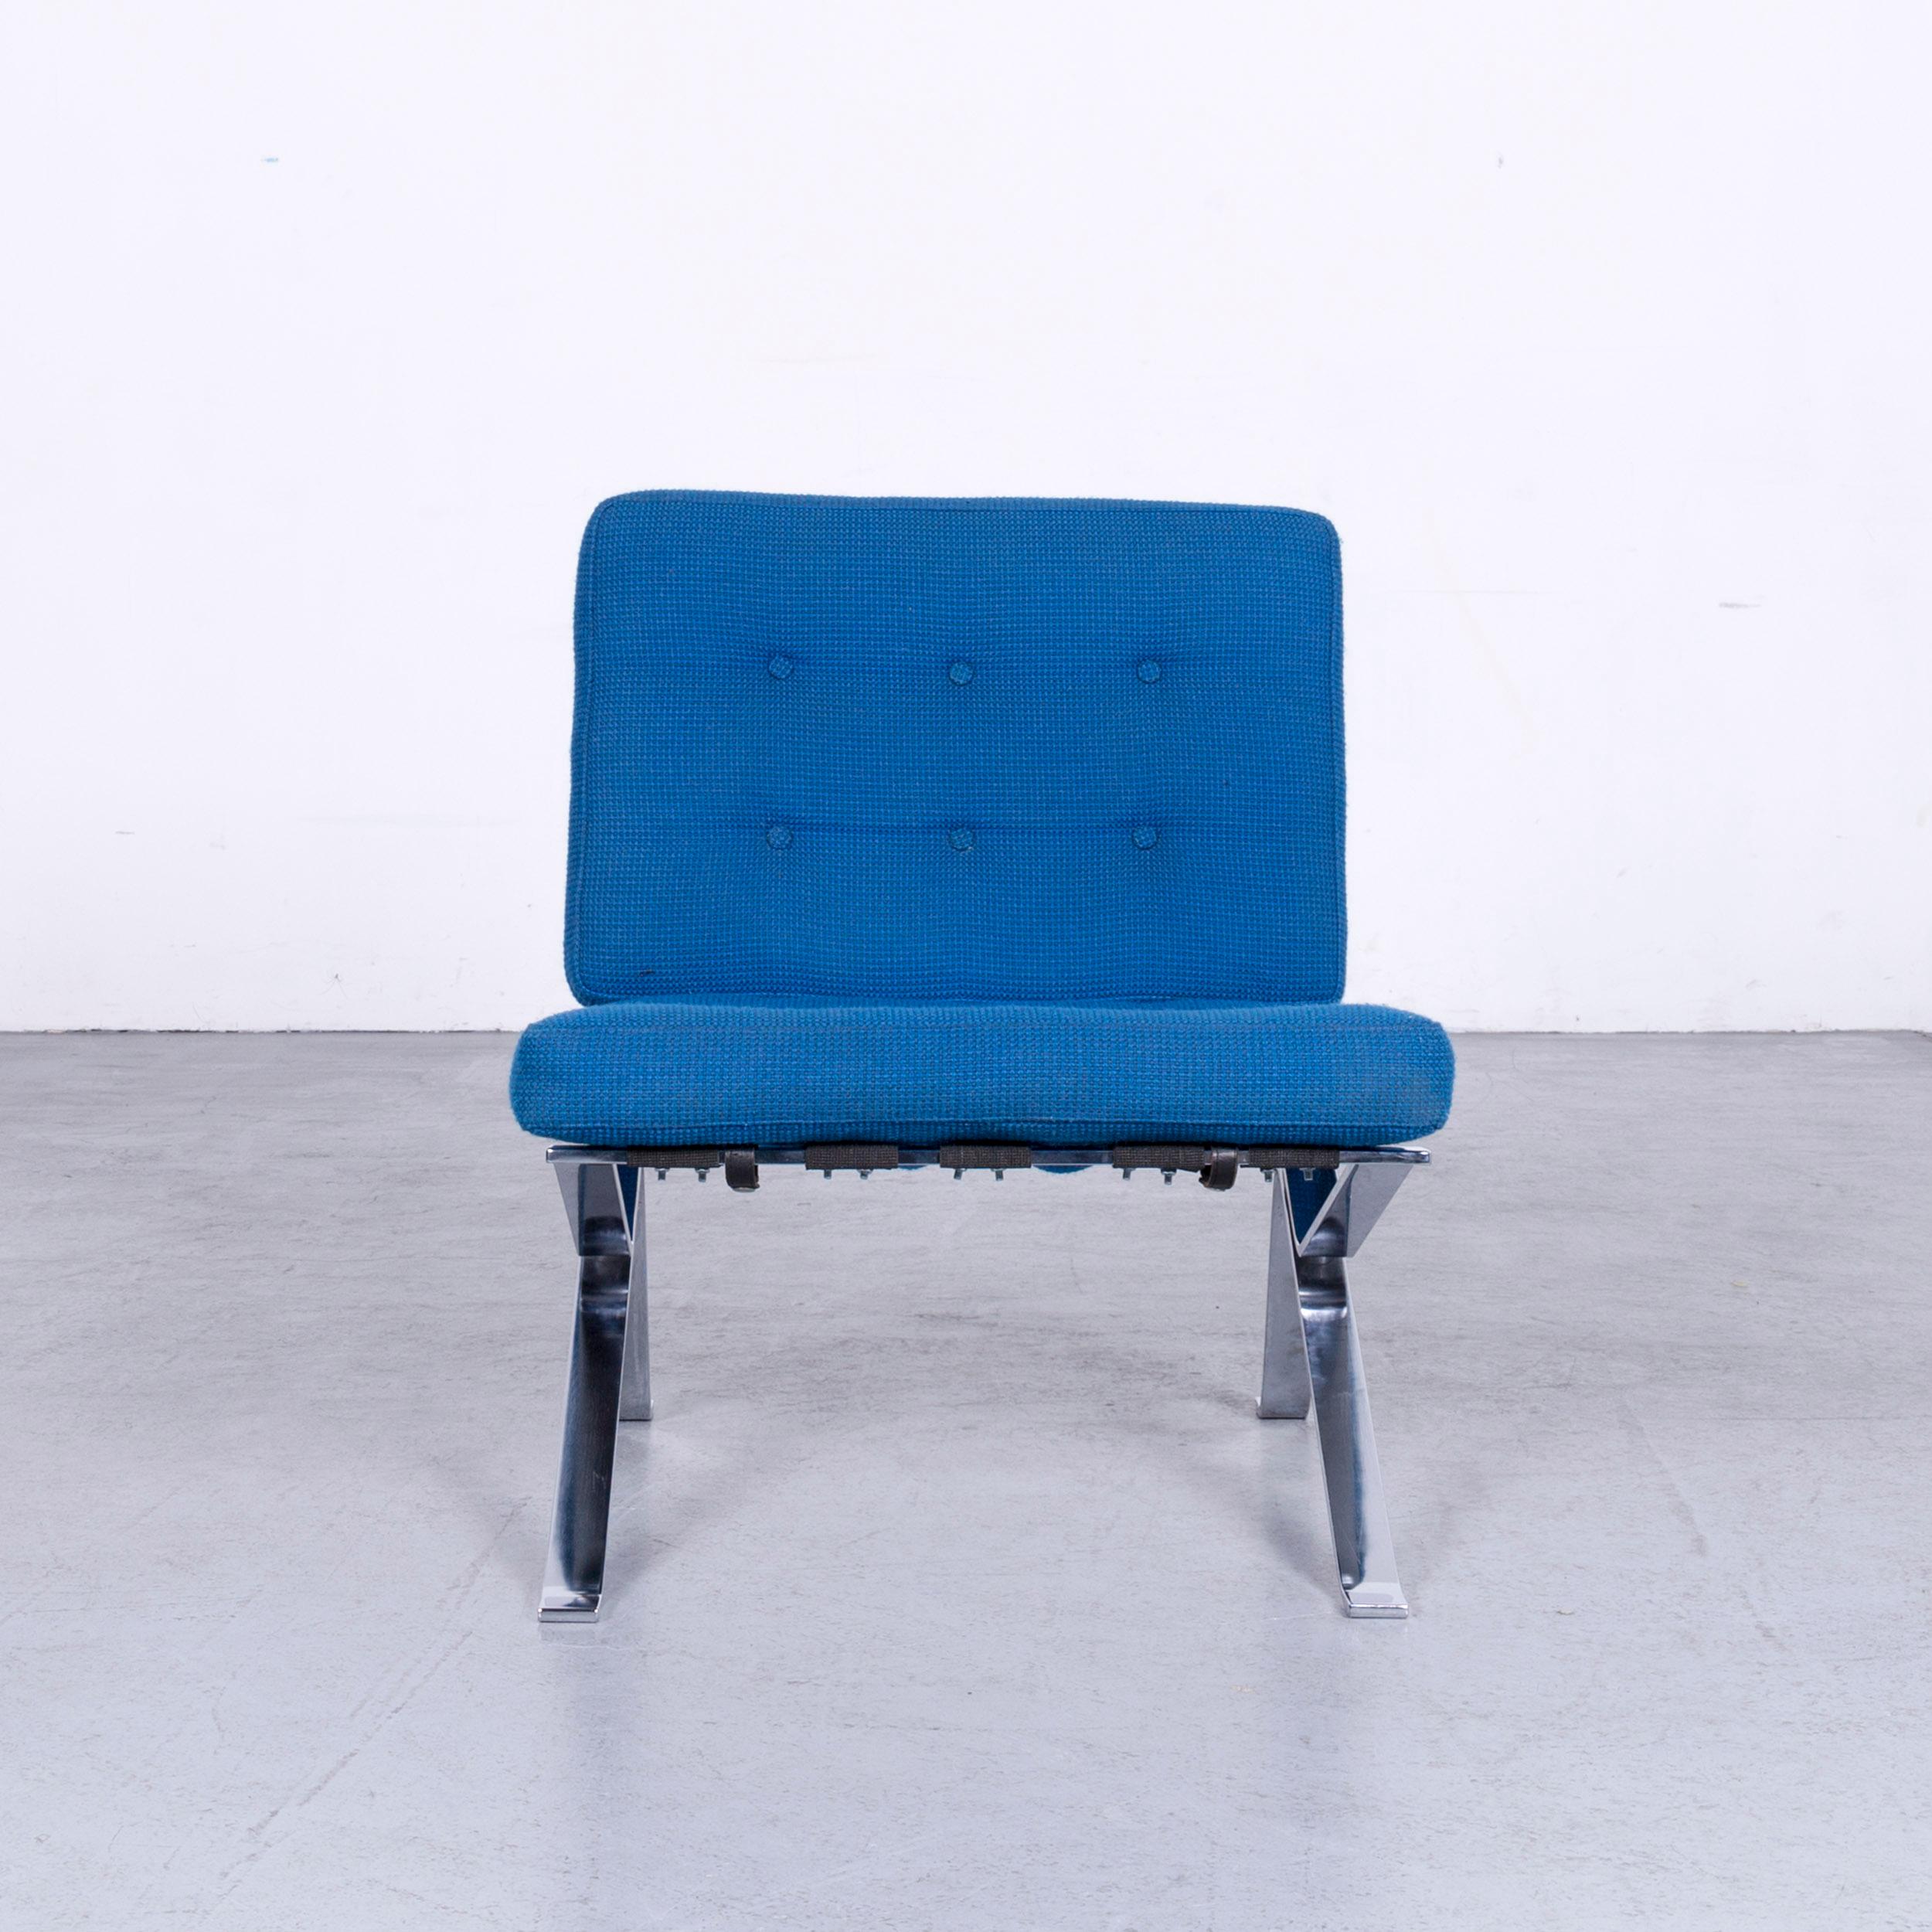 Blue colored original Stella Schweiz designer chair in a structured fabric, designed by Walter Frey.